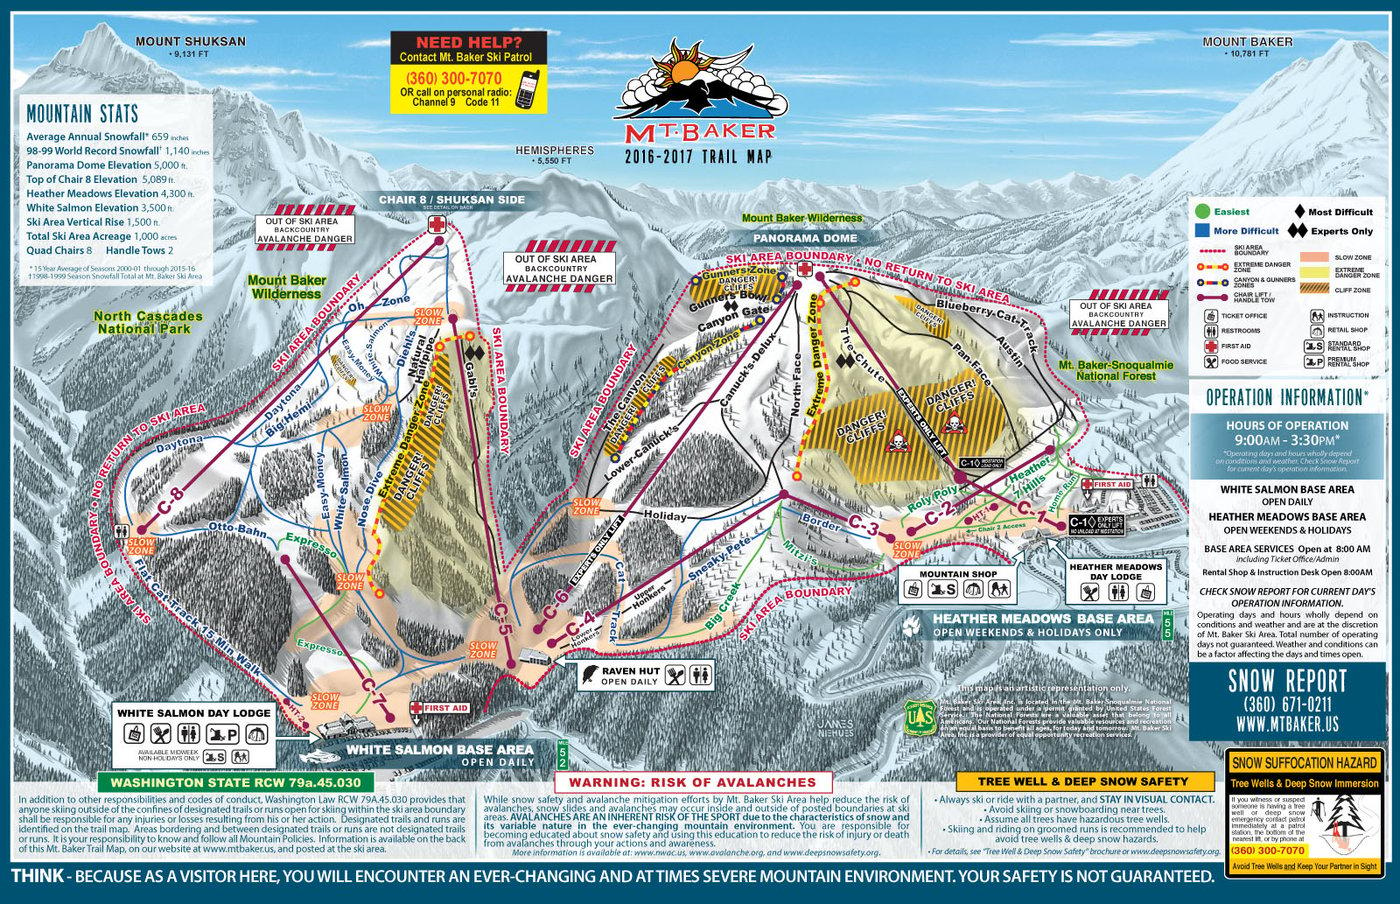 Mount Baker Trail Map